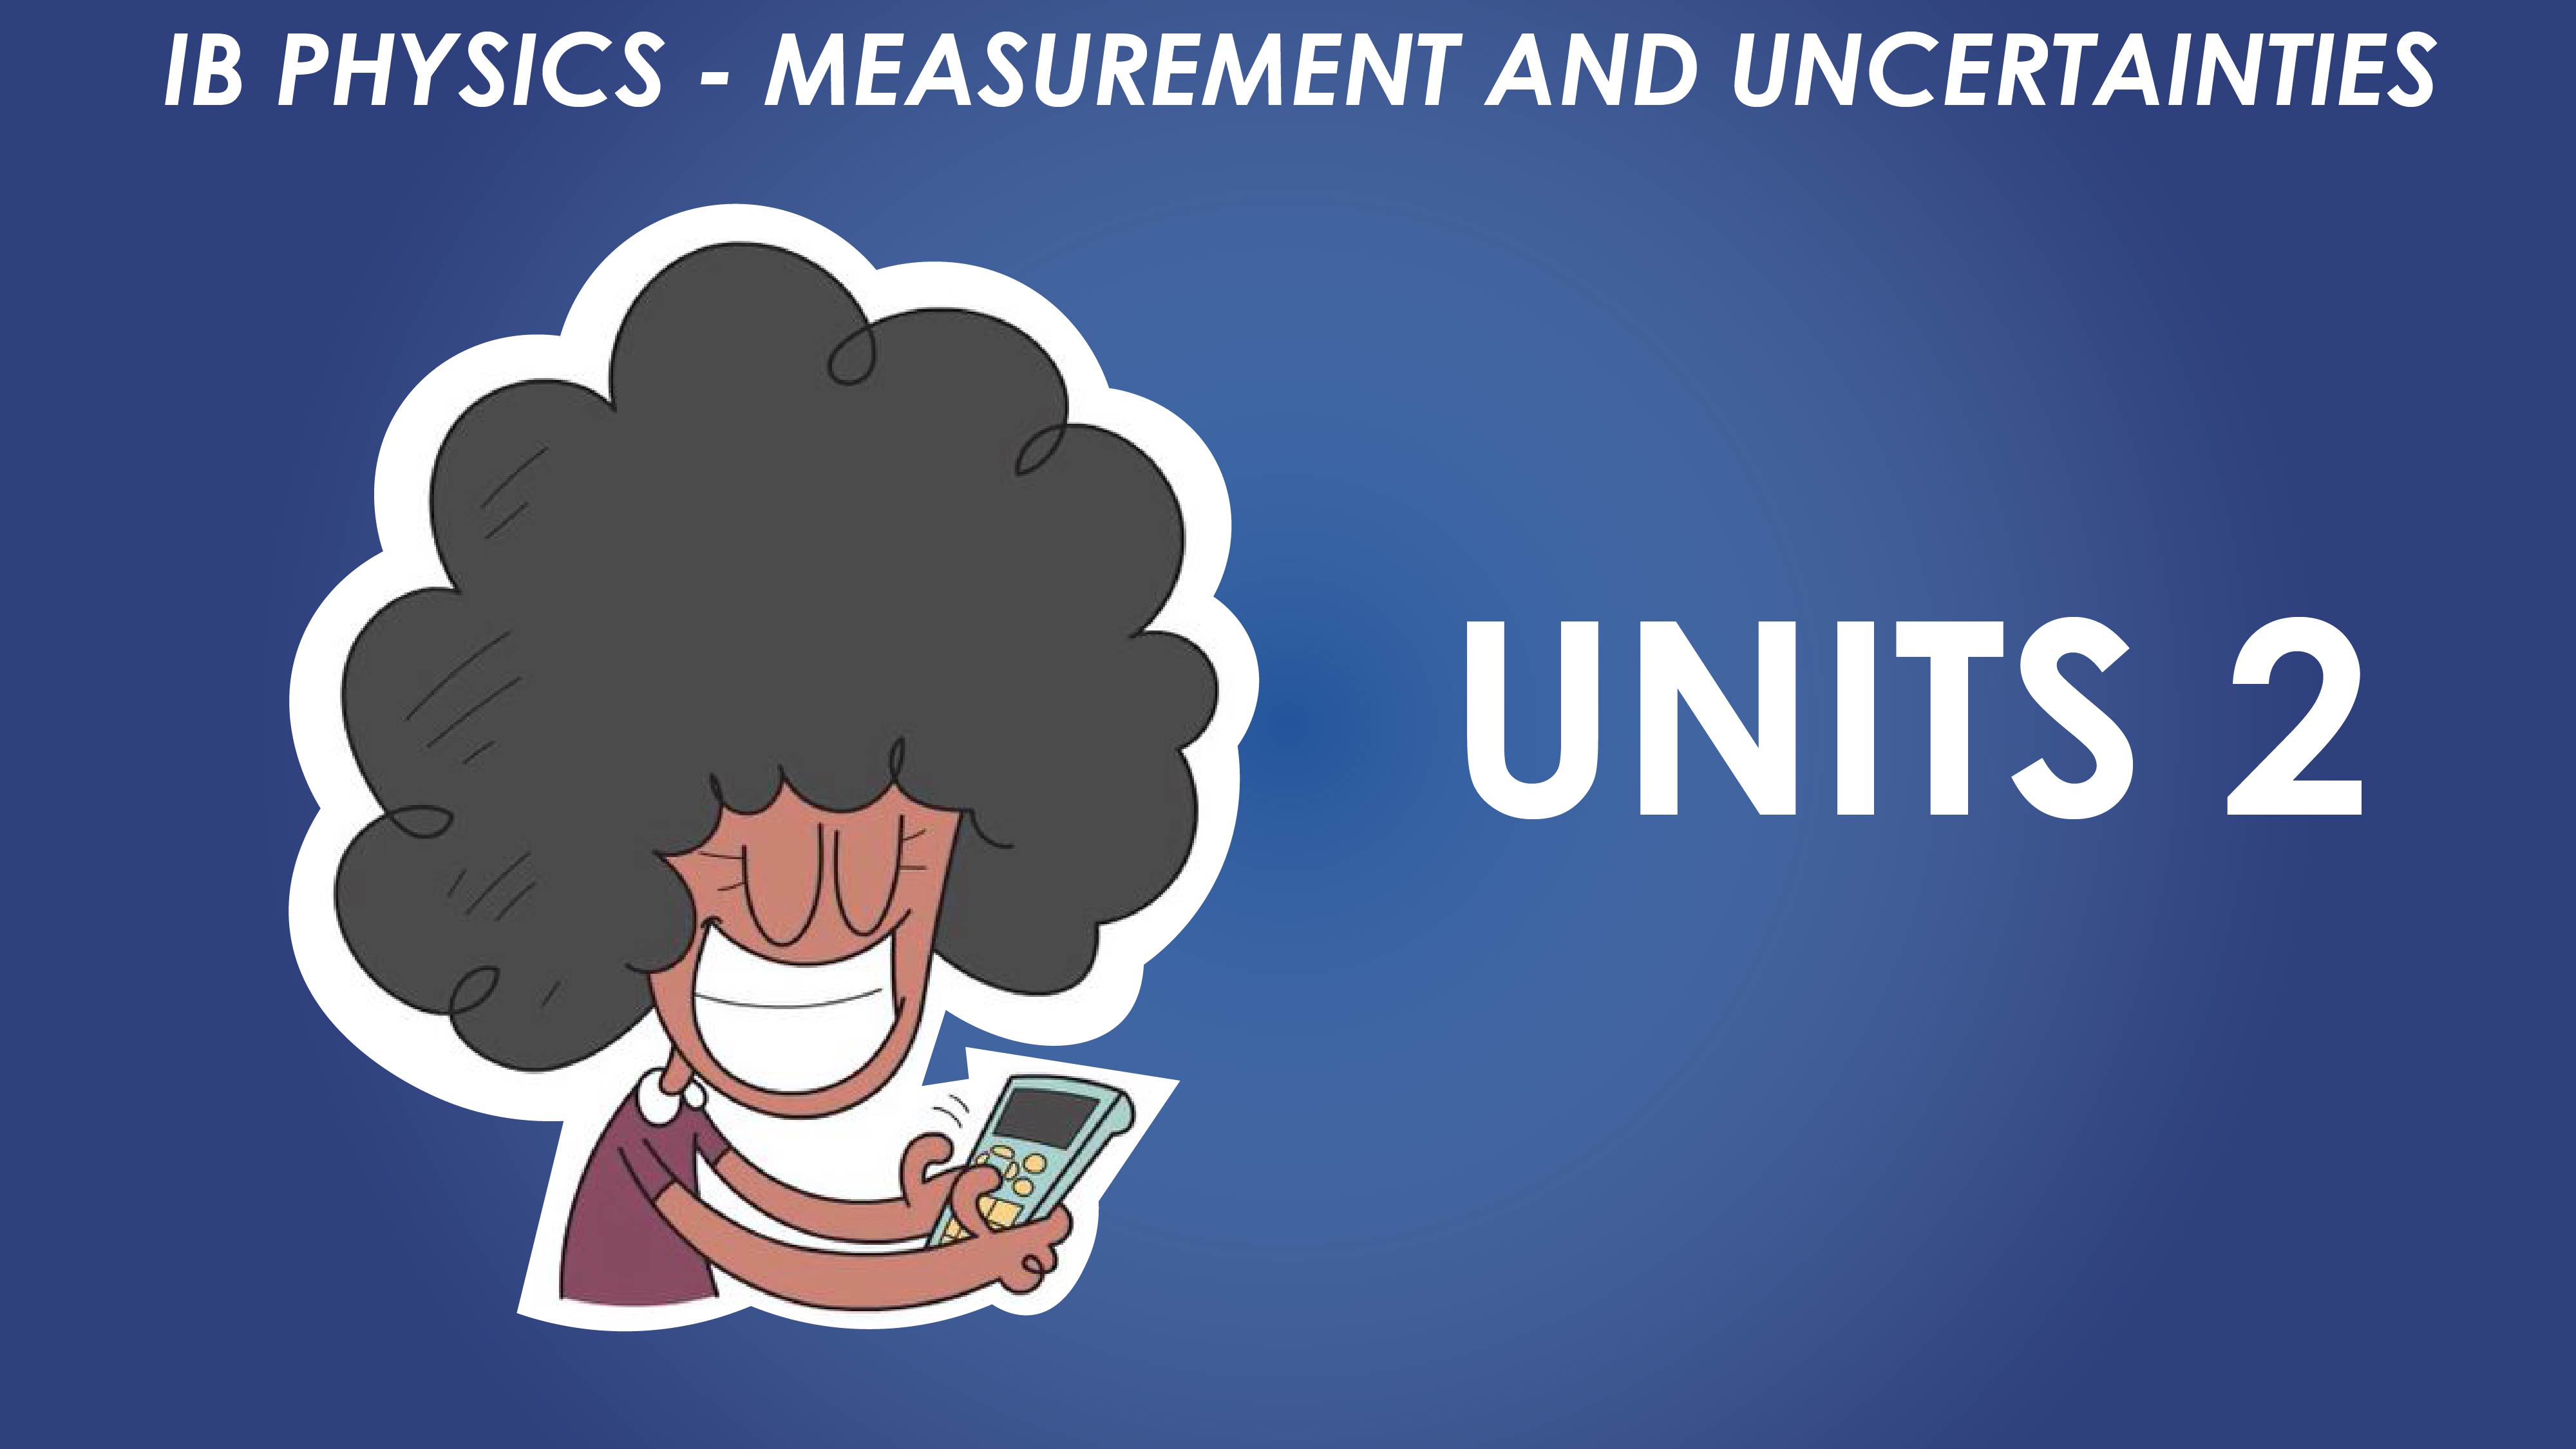 IB Measurement and Uncertainties - Units 2